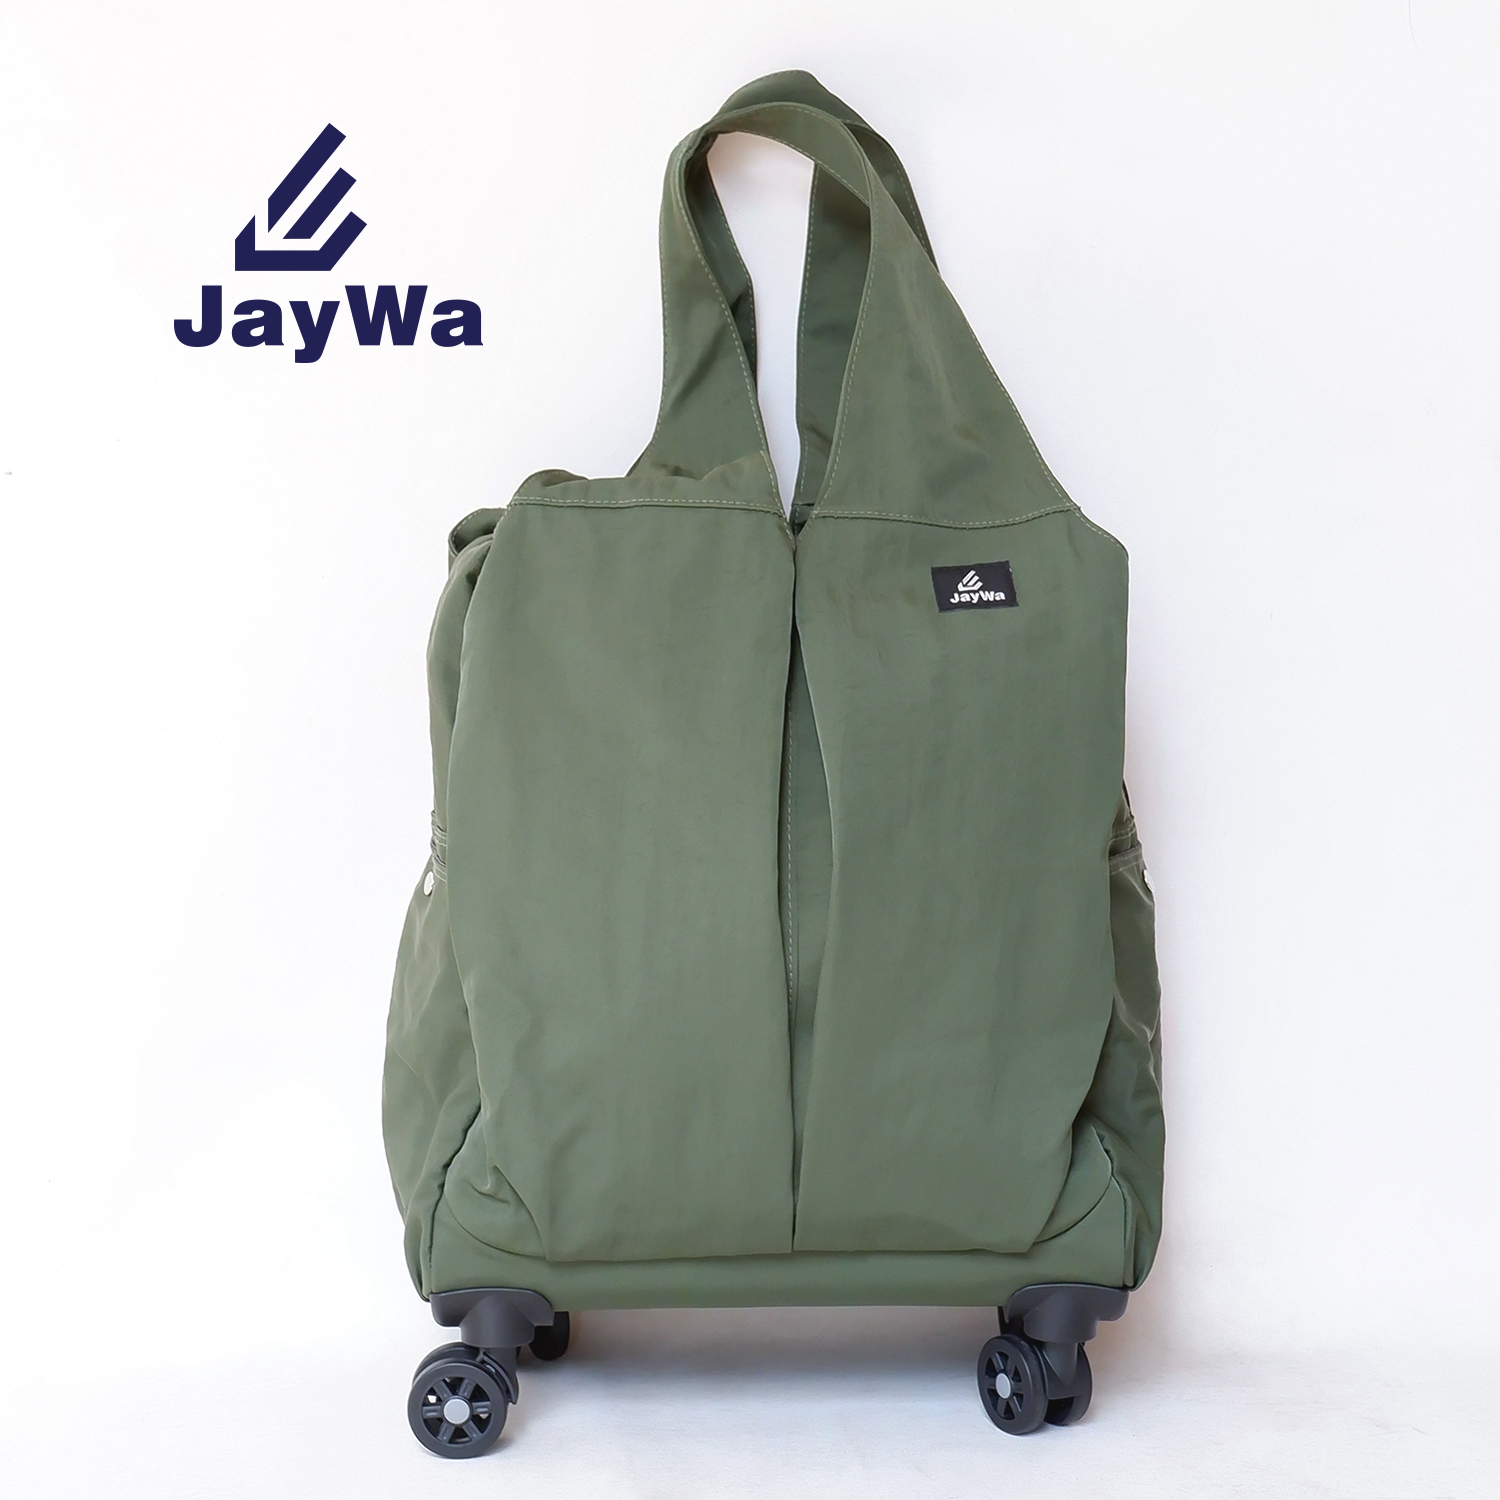 JayWa กระเป๋าสะพายล้อลาก  กระเป๋าเดินทางใบเล็กกระเป๋าช้อปปิ้งล้อลาก กระเป๋าเดินทางล้อลาก กระเป๋าเอกสาร เป้ล้อลาก รุ่น Beside-Olive Green (L)